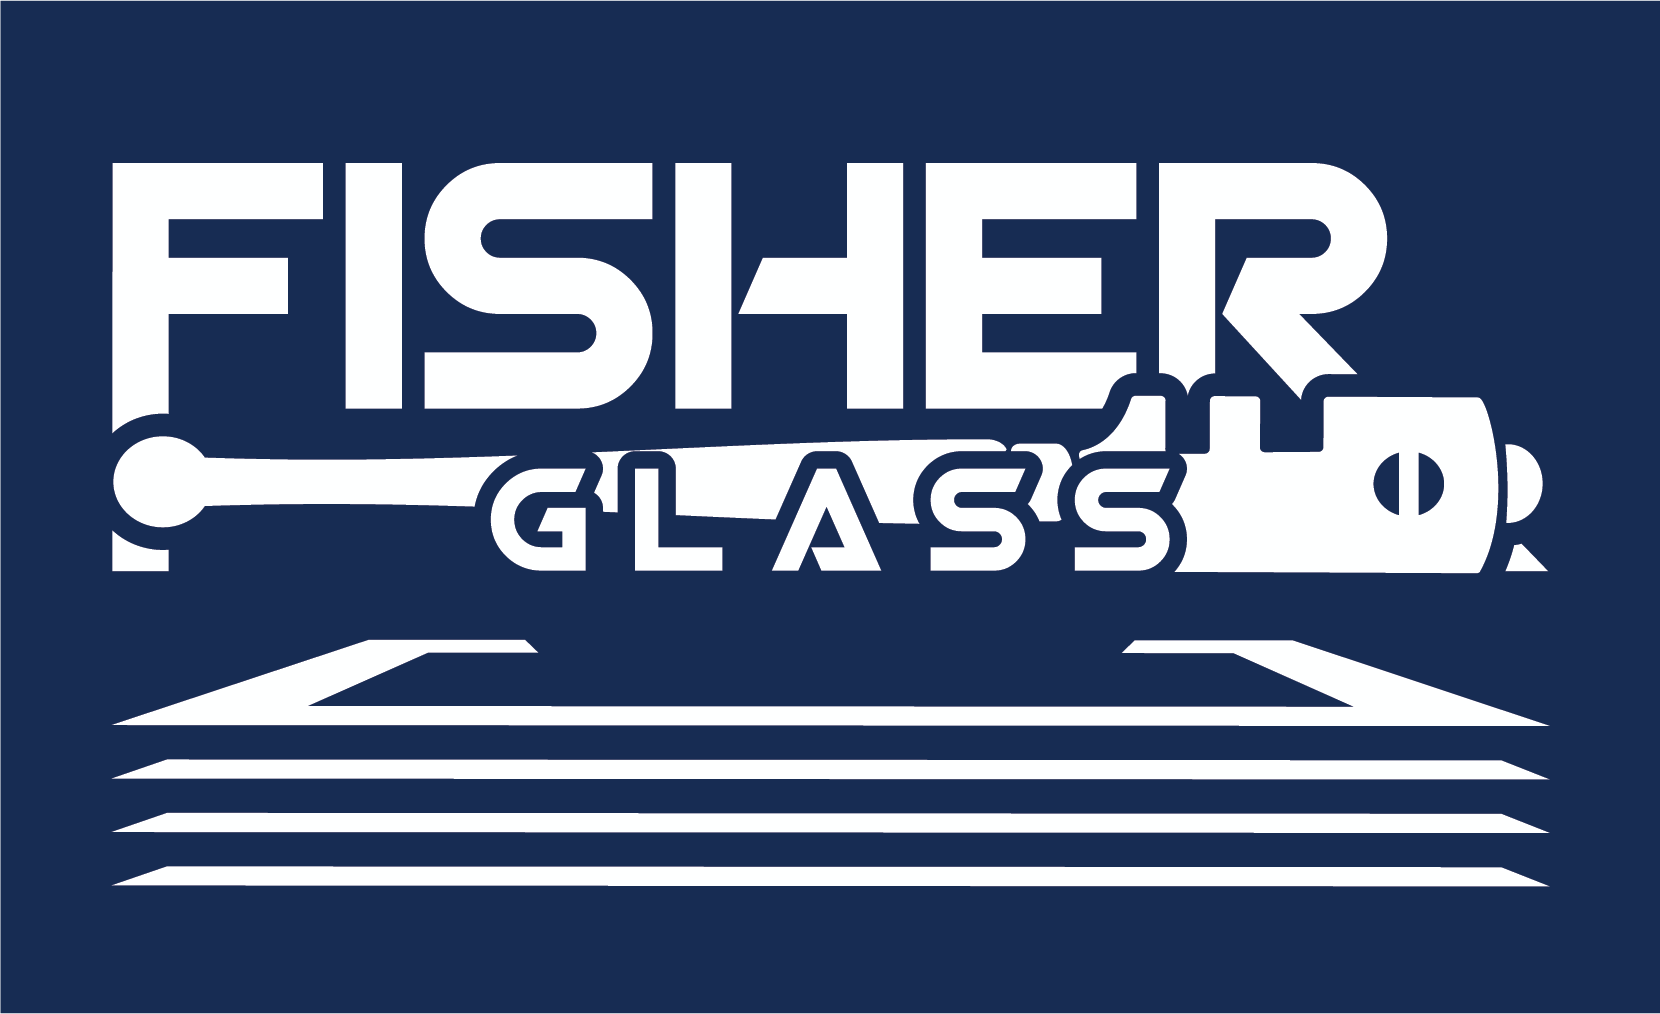 Fisher Glass Inc Logo